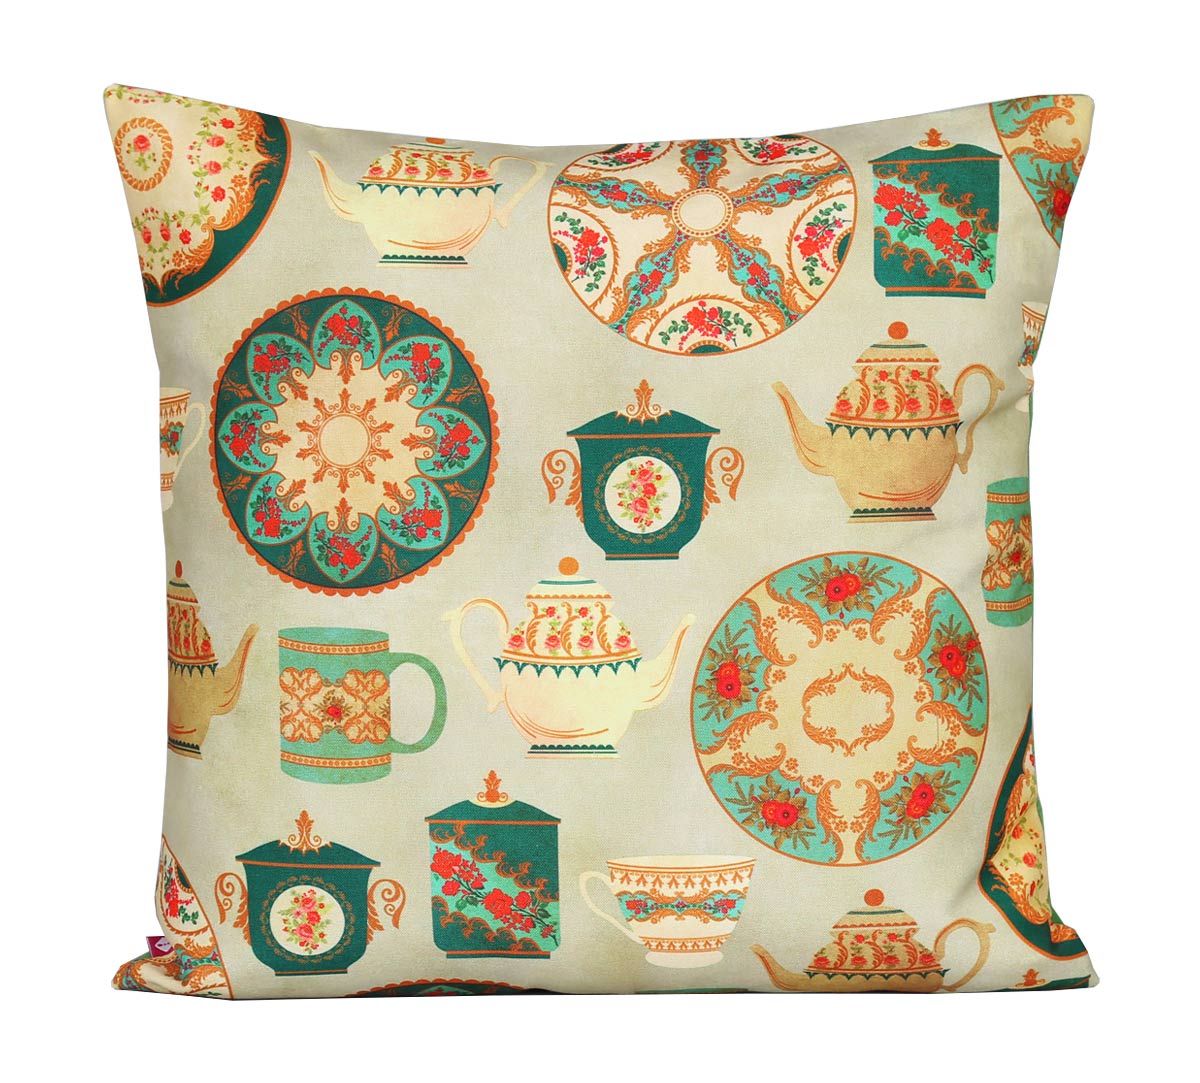 India Circus All About Tea Canvas Cushion Cover